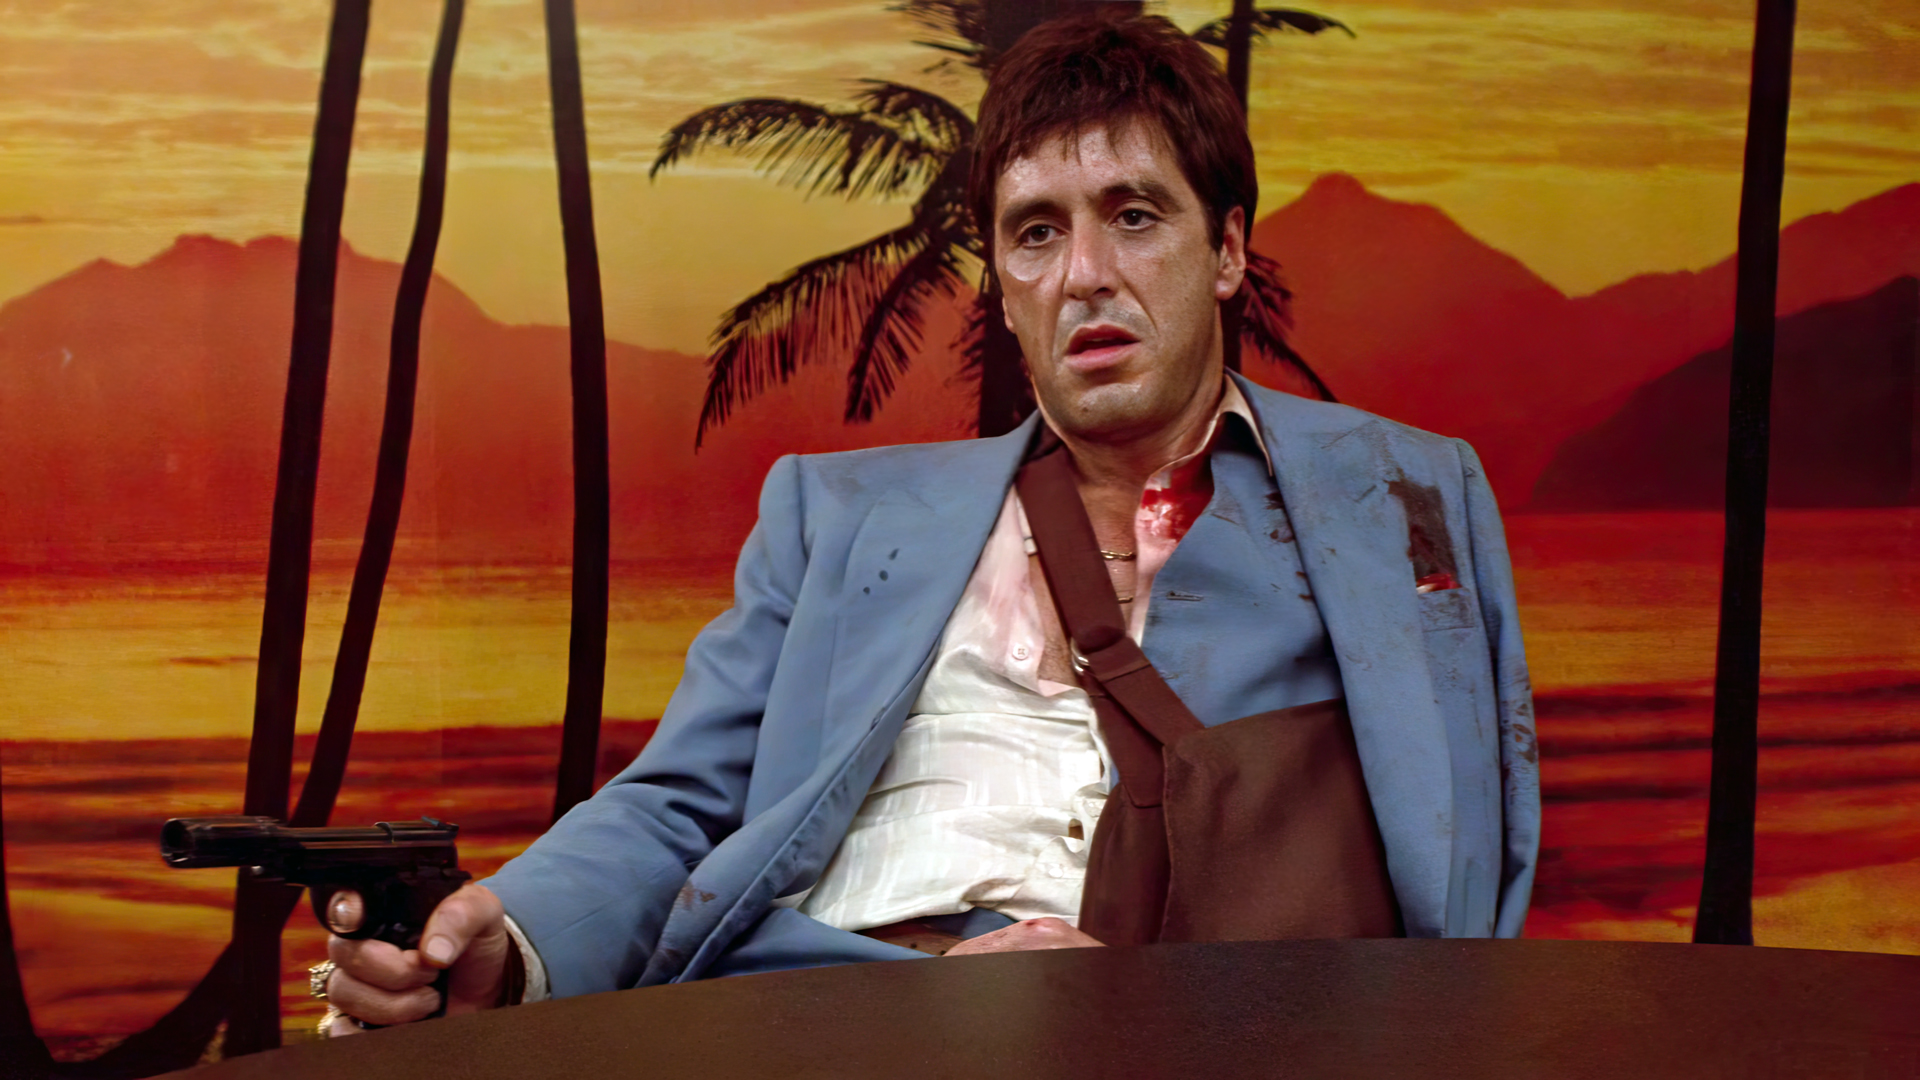 People 1920x1080 Scarface Tony Montana Al Pacino movies film stills pistol palm trees arm sling Miami men actor 1980s